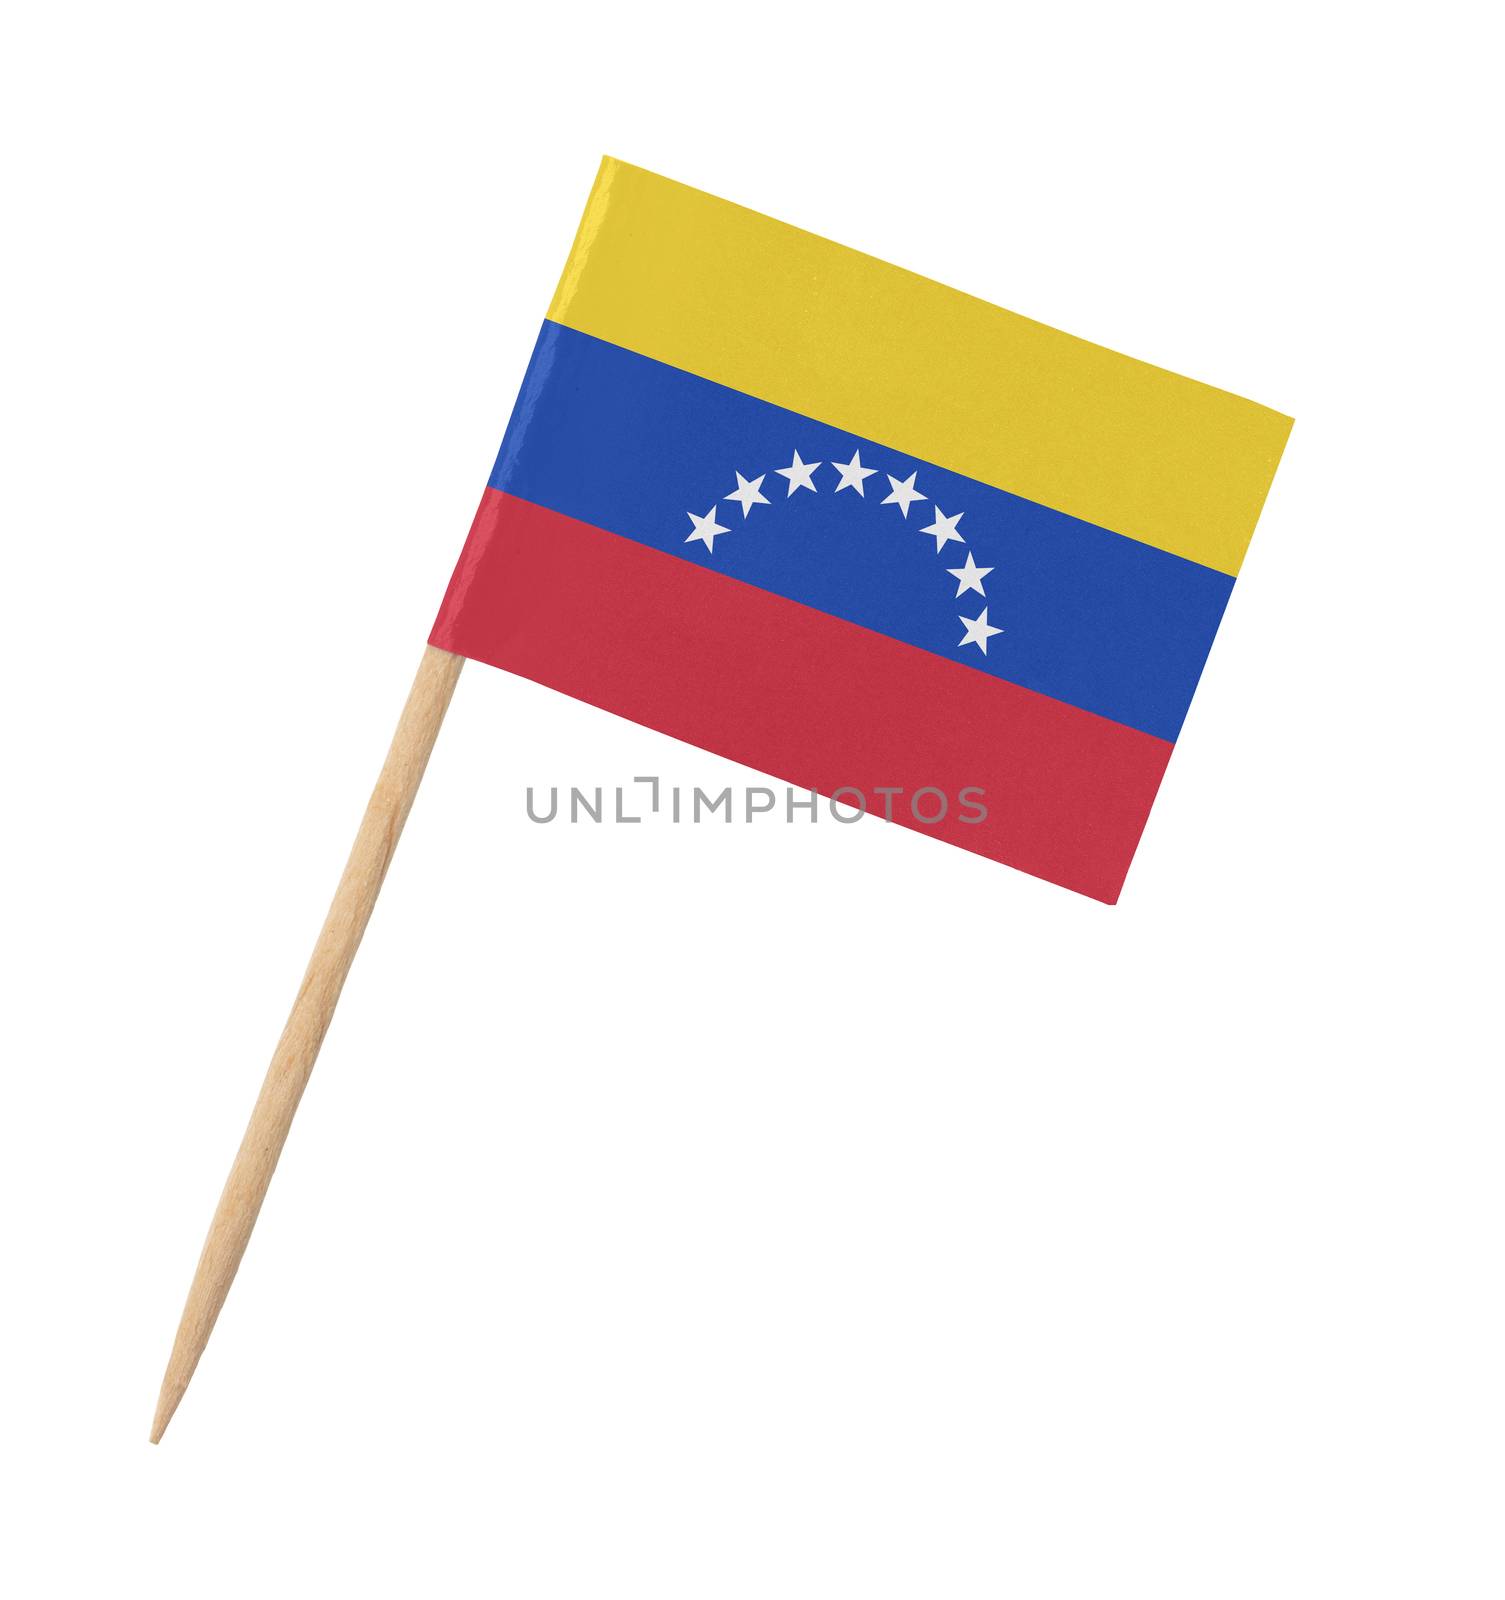 Small paper Venezuelan flag on wooden stick by michaklootwijk